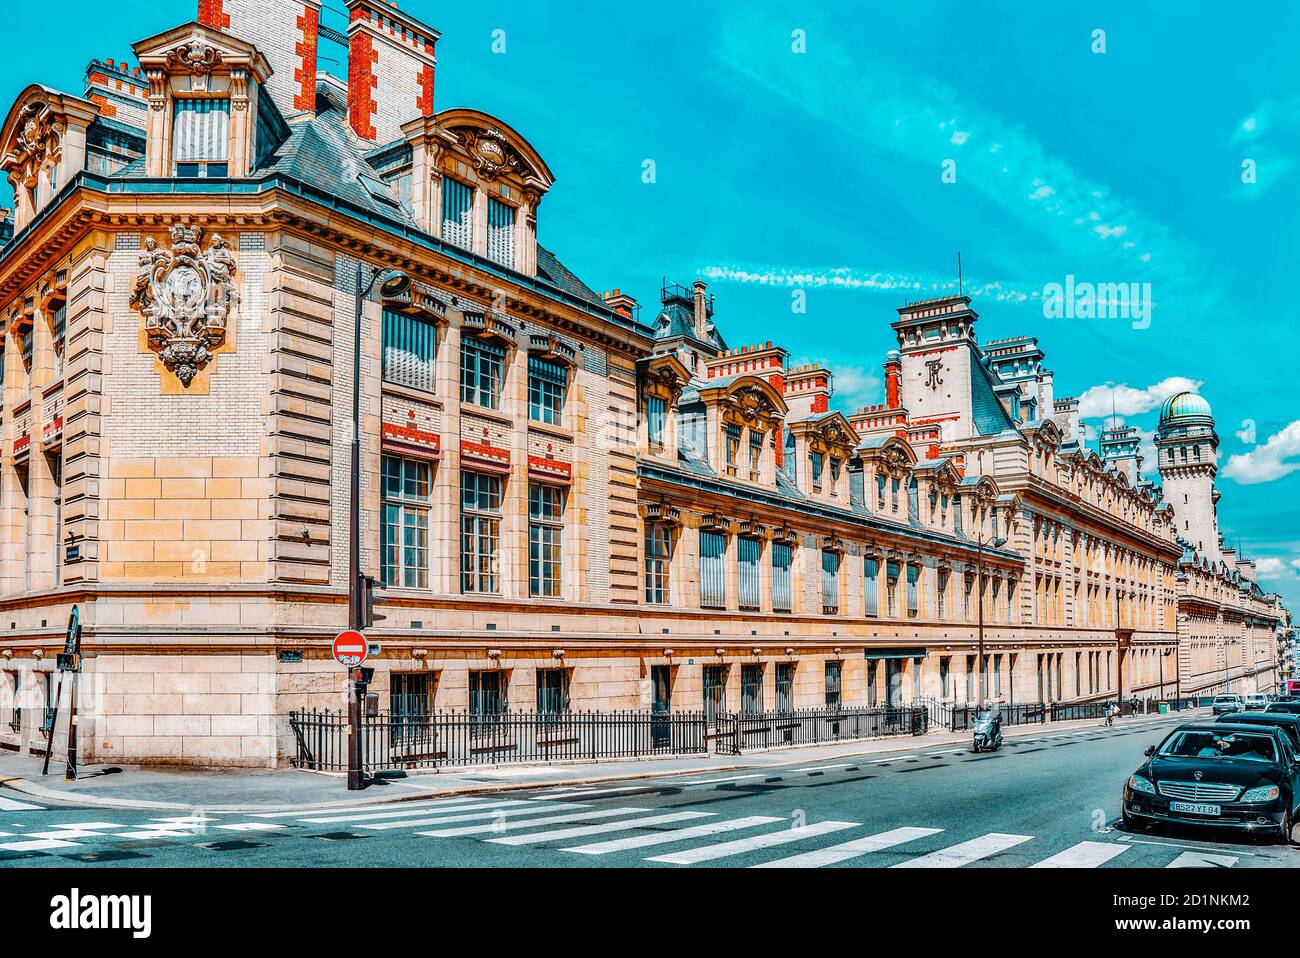 6.10. THE BON MARCHÉ IN PARIS – The Architecture Professor